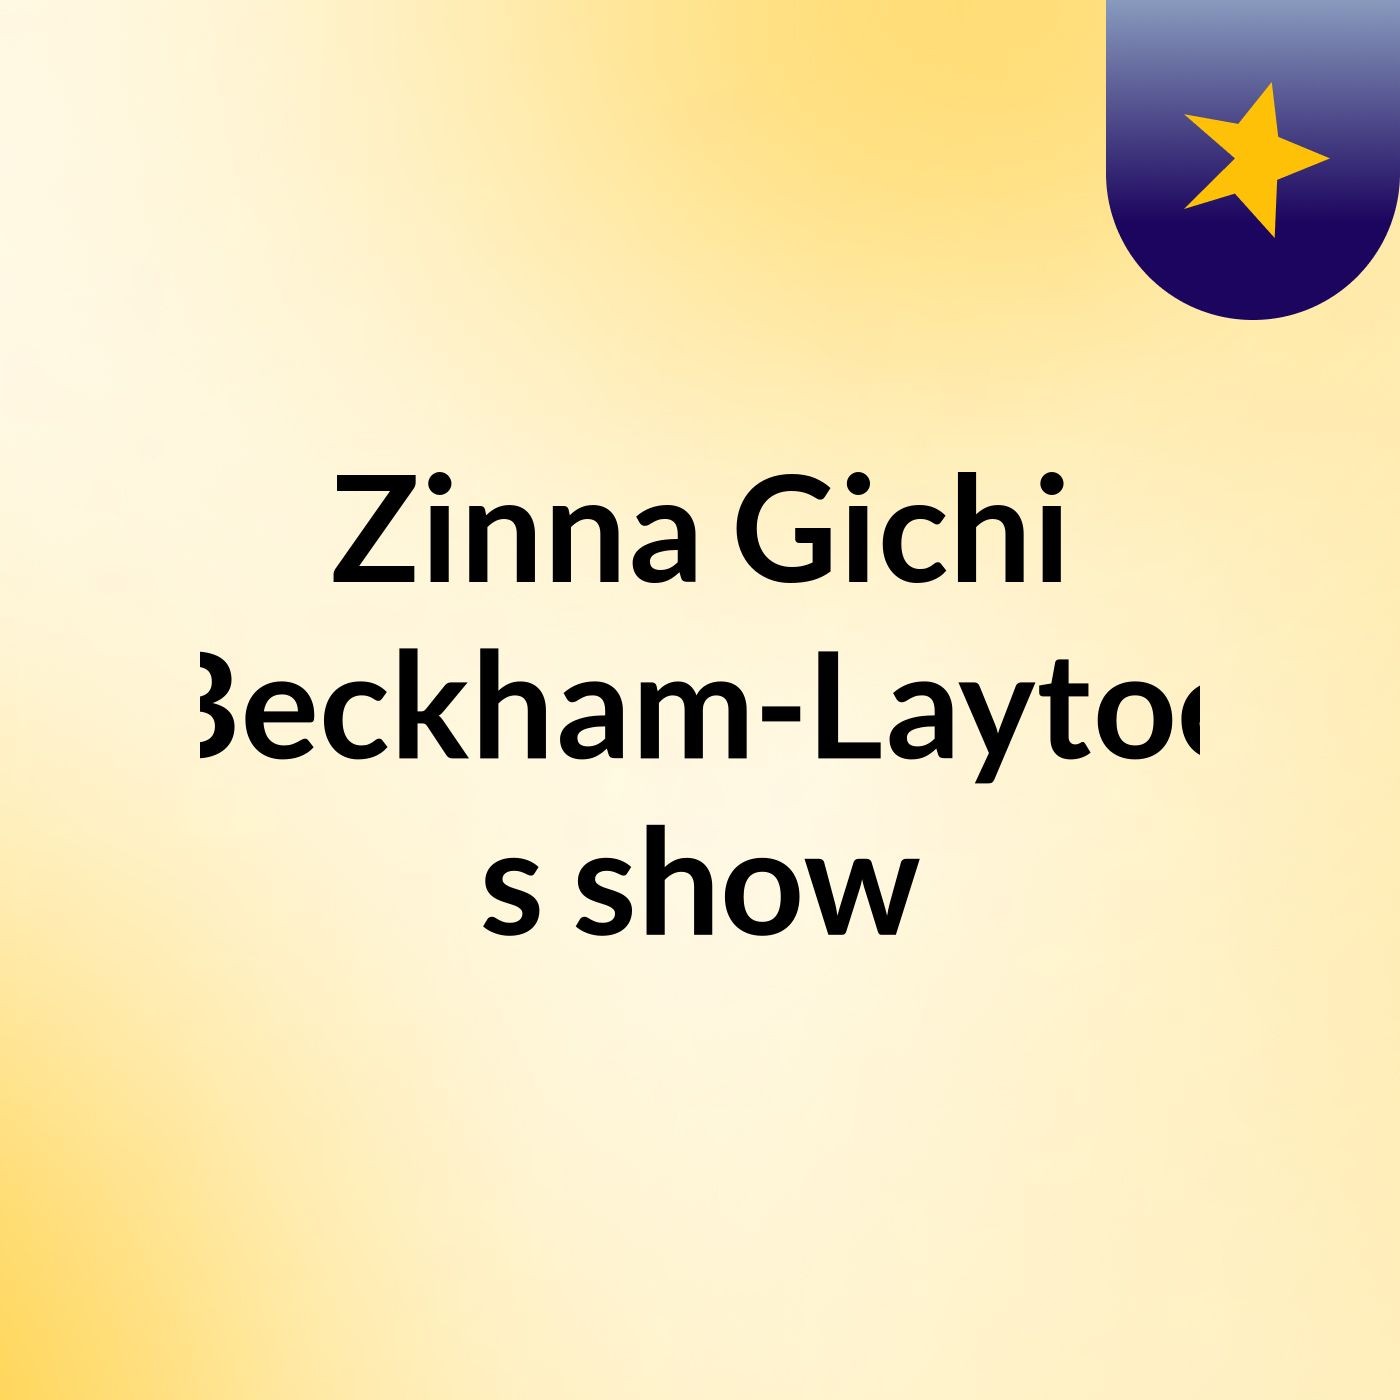 Zinna Gichi Beckham-Laytoe's show